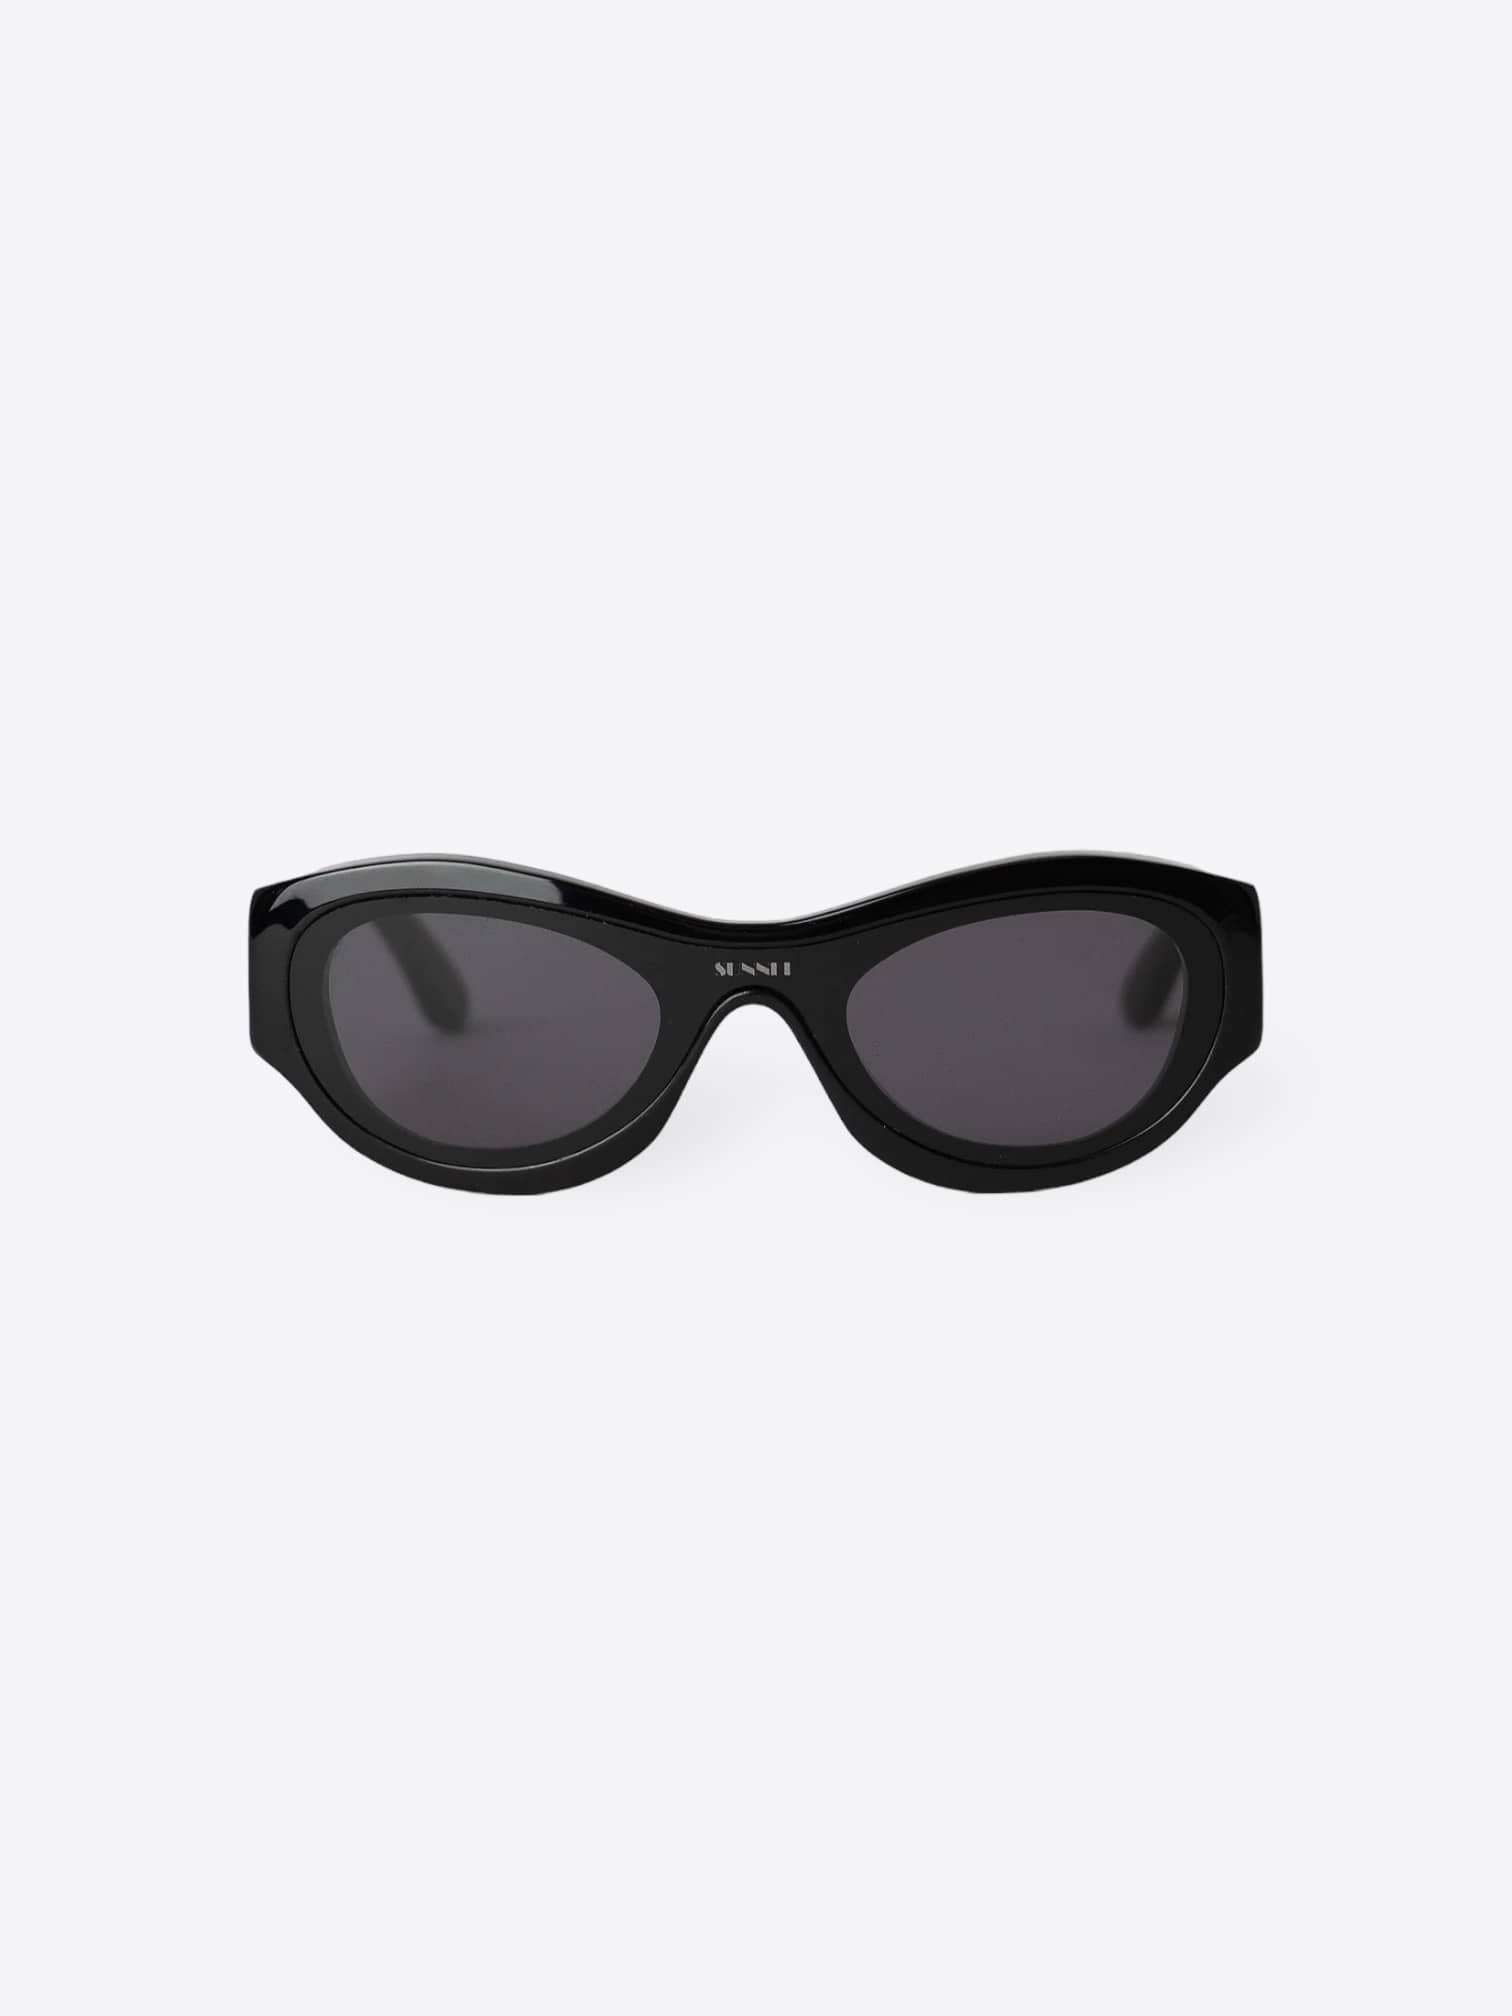 Sunnei Black Sunglasses SS23